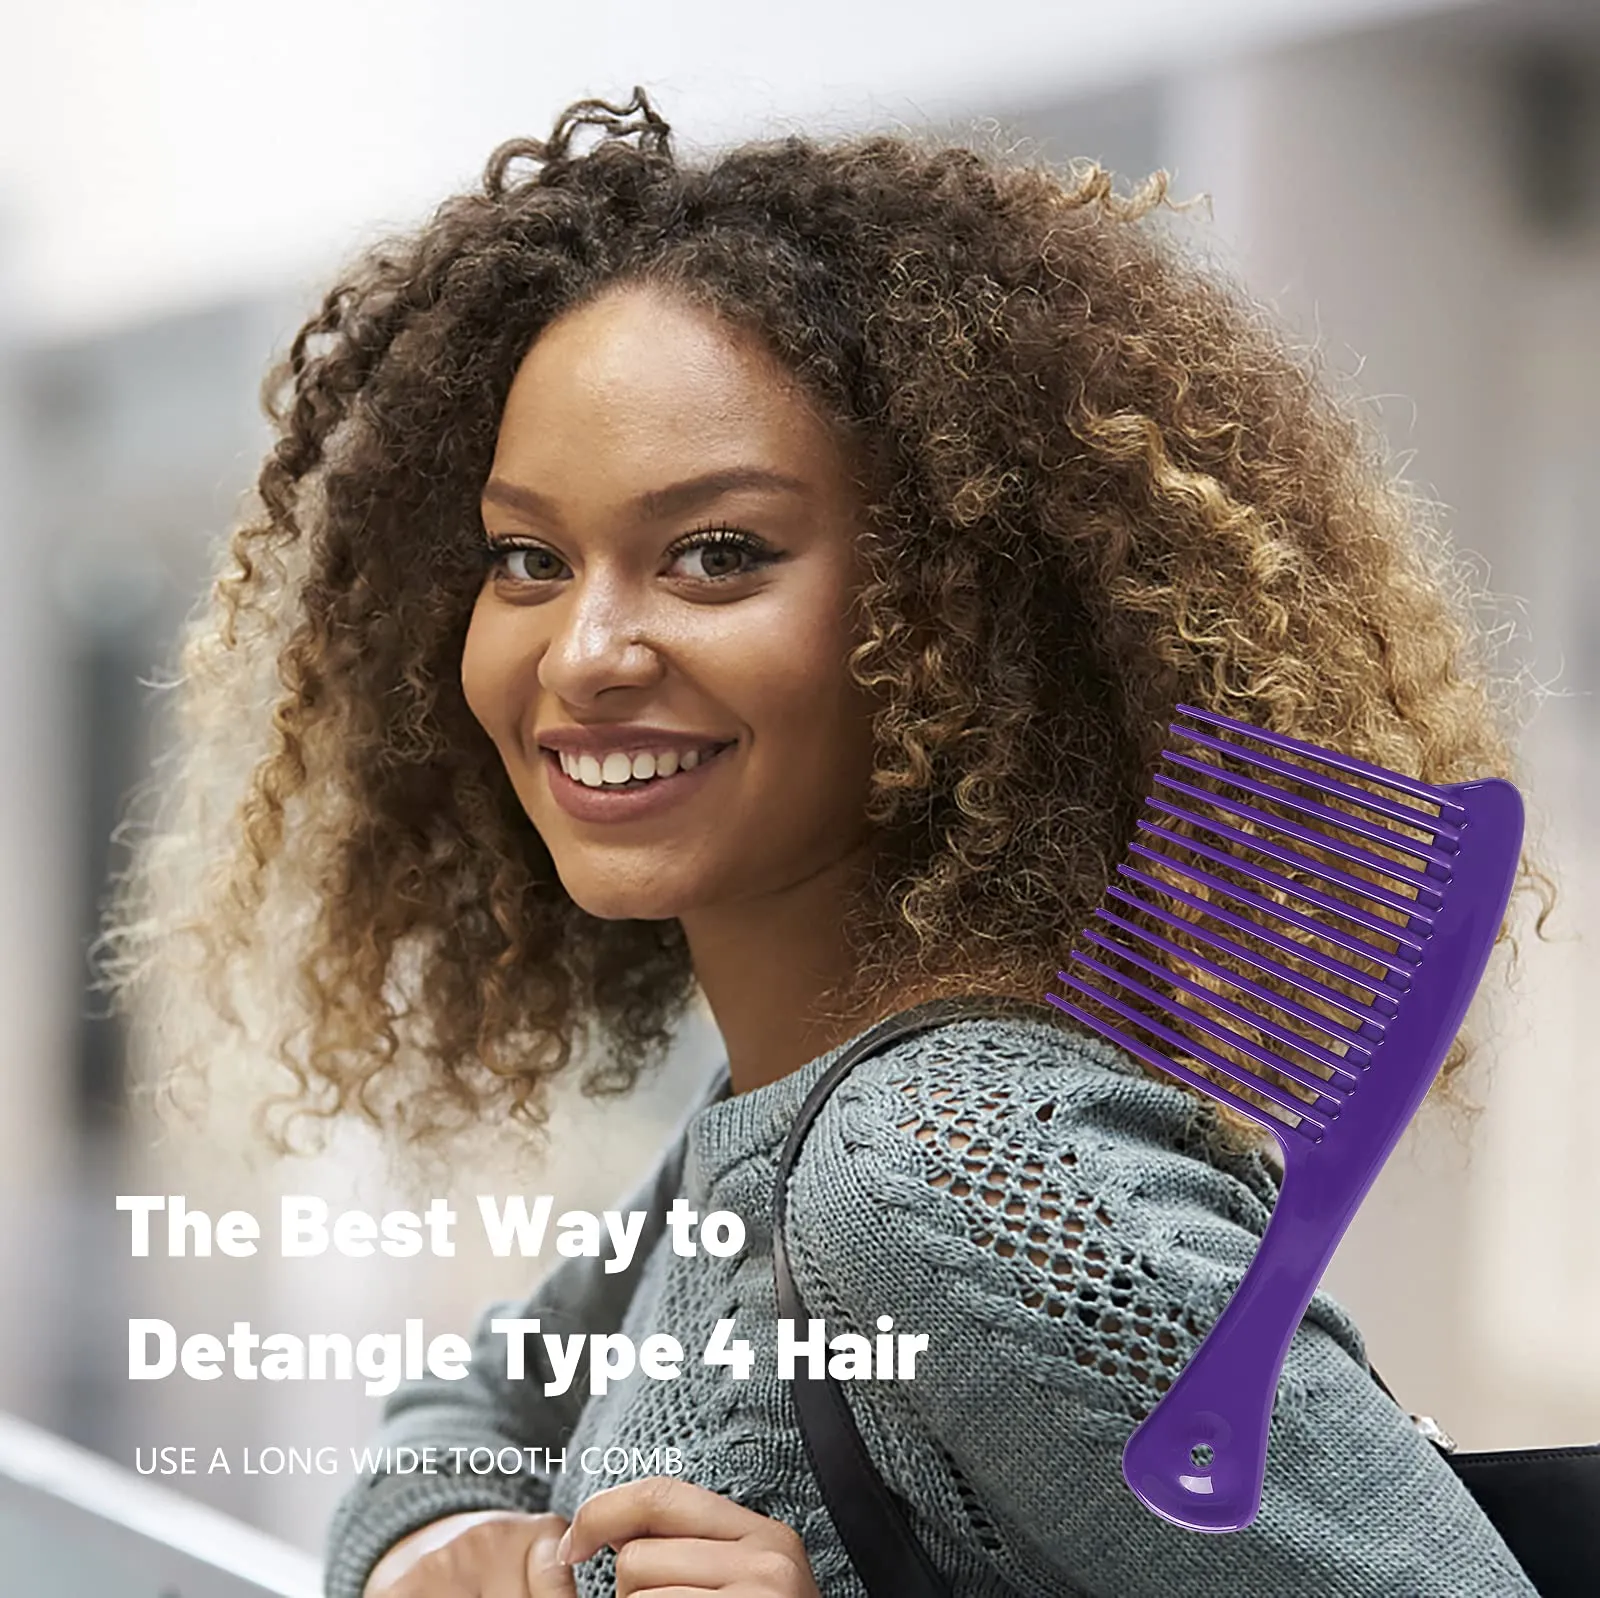 wide tooth comb hair detangler salon shampoo comb for thick hair long hair and curly hair detangling tools for 4c hair jumbo rake comb purple